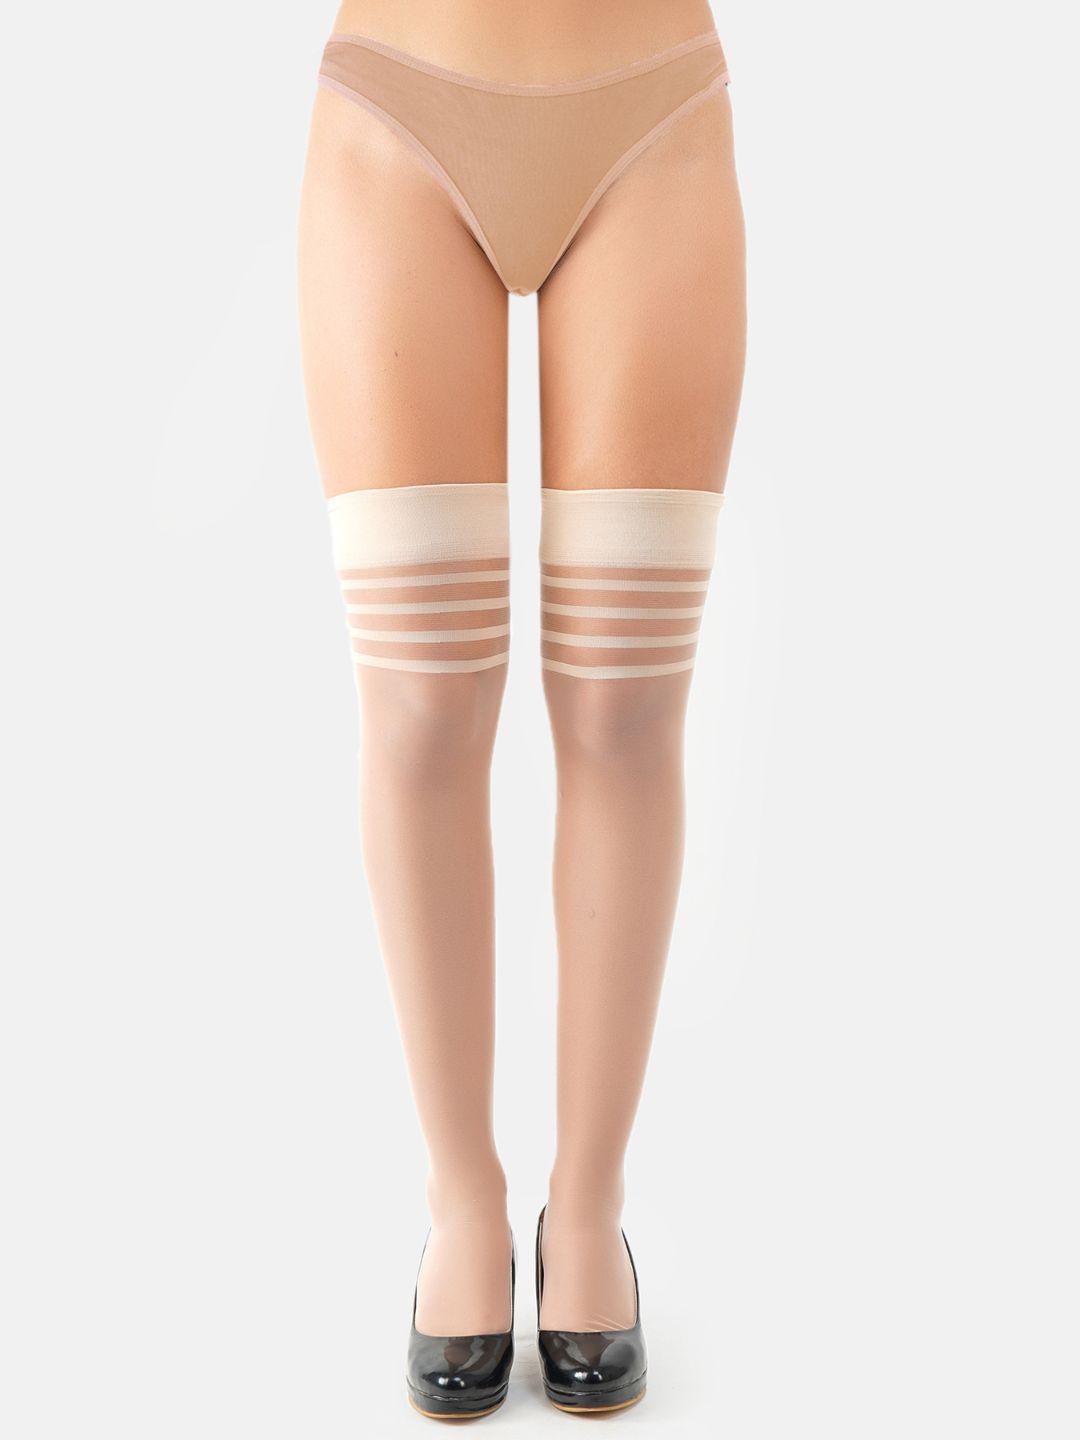 n2s next2skin women beige striped thigh-high stockings